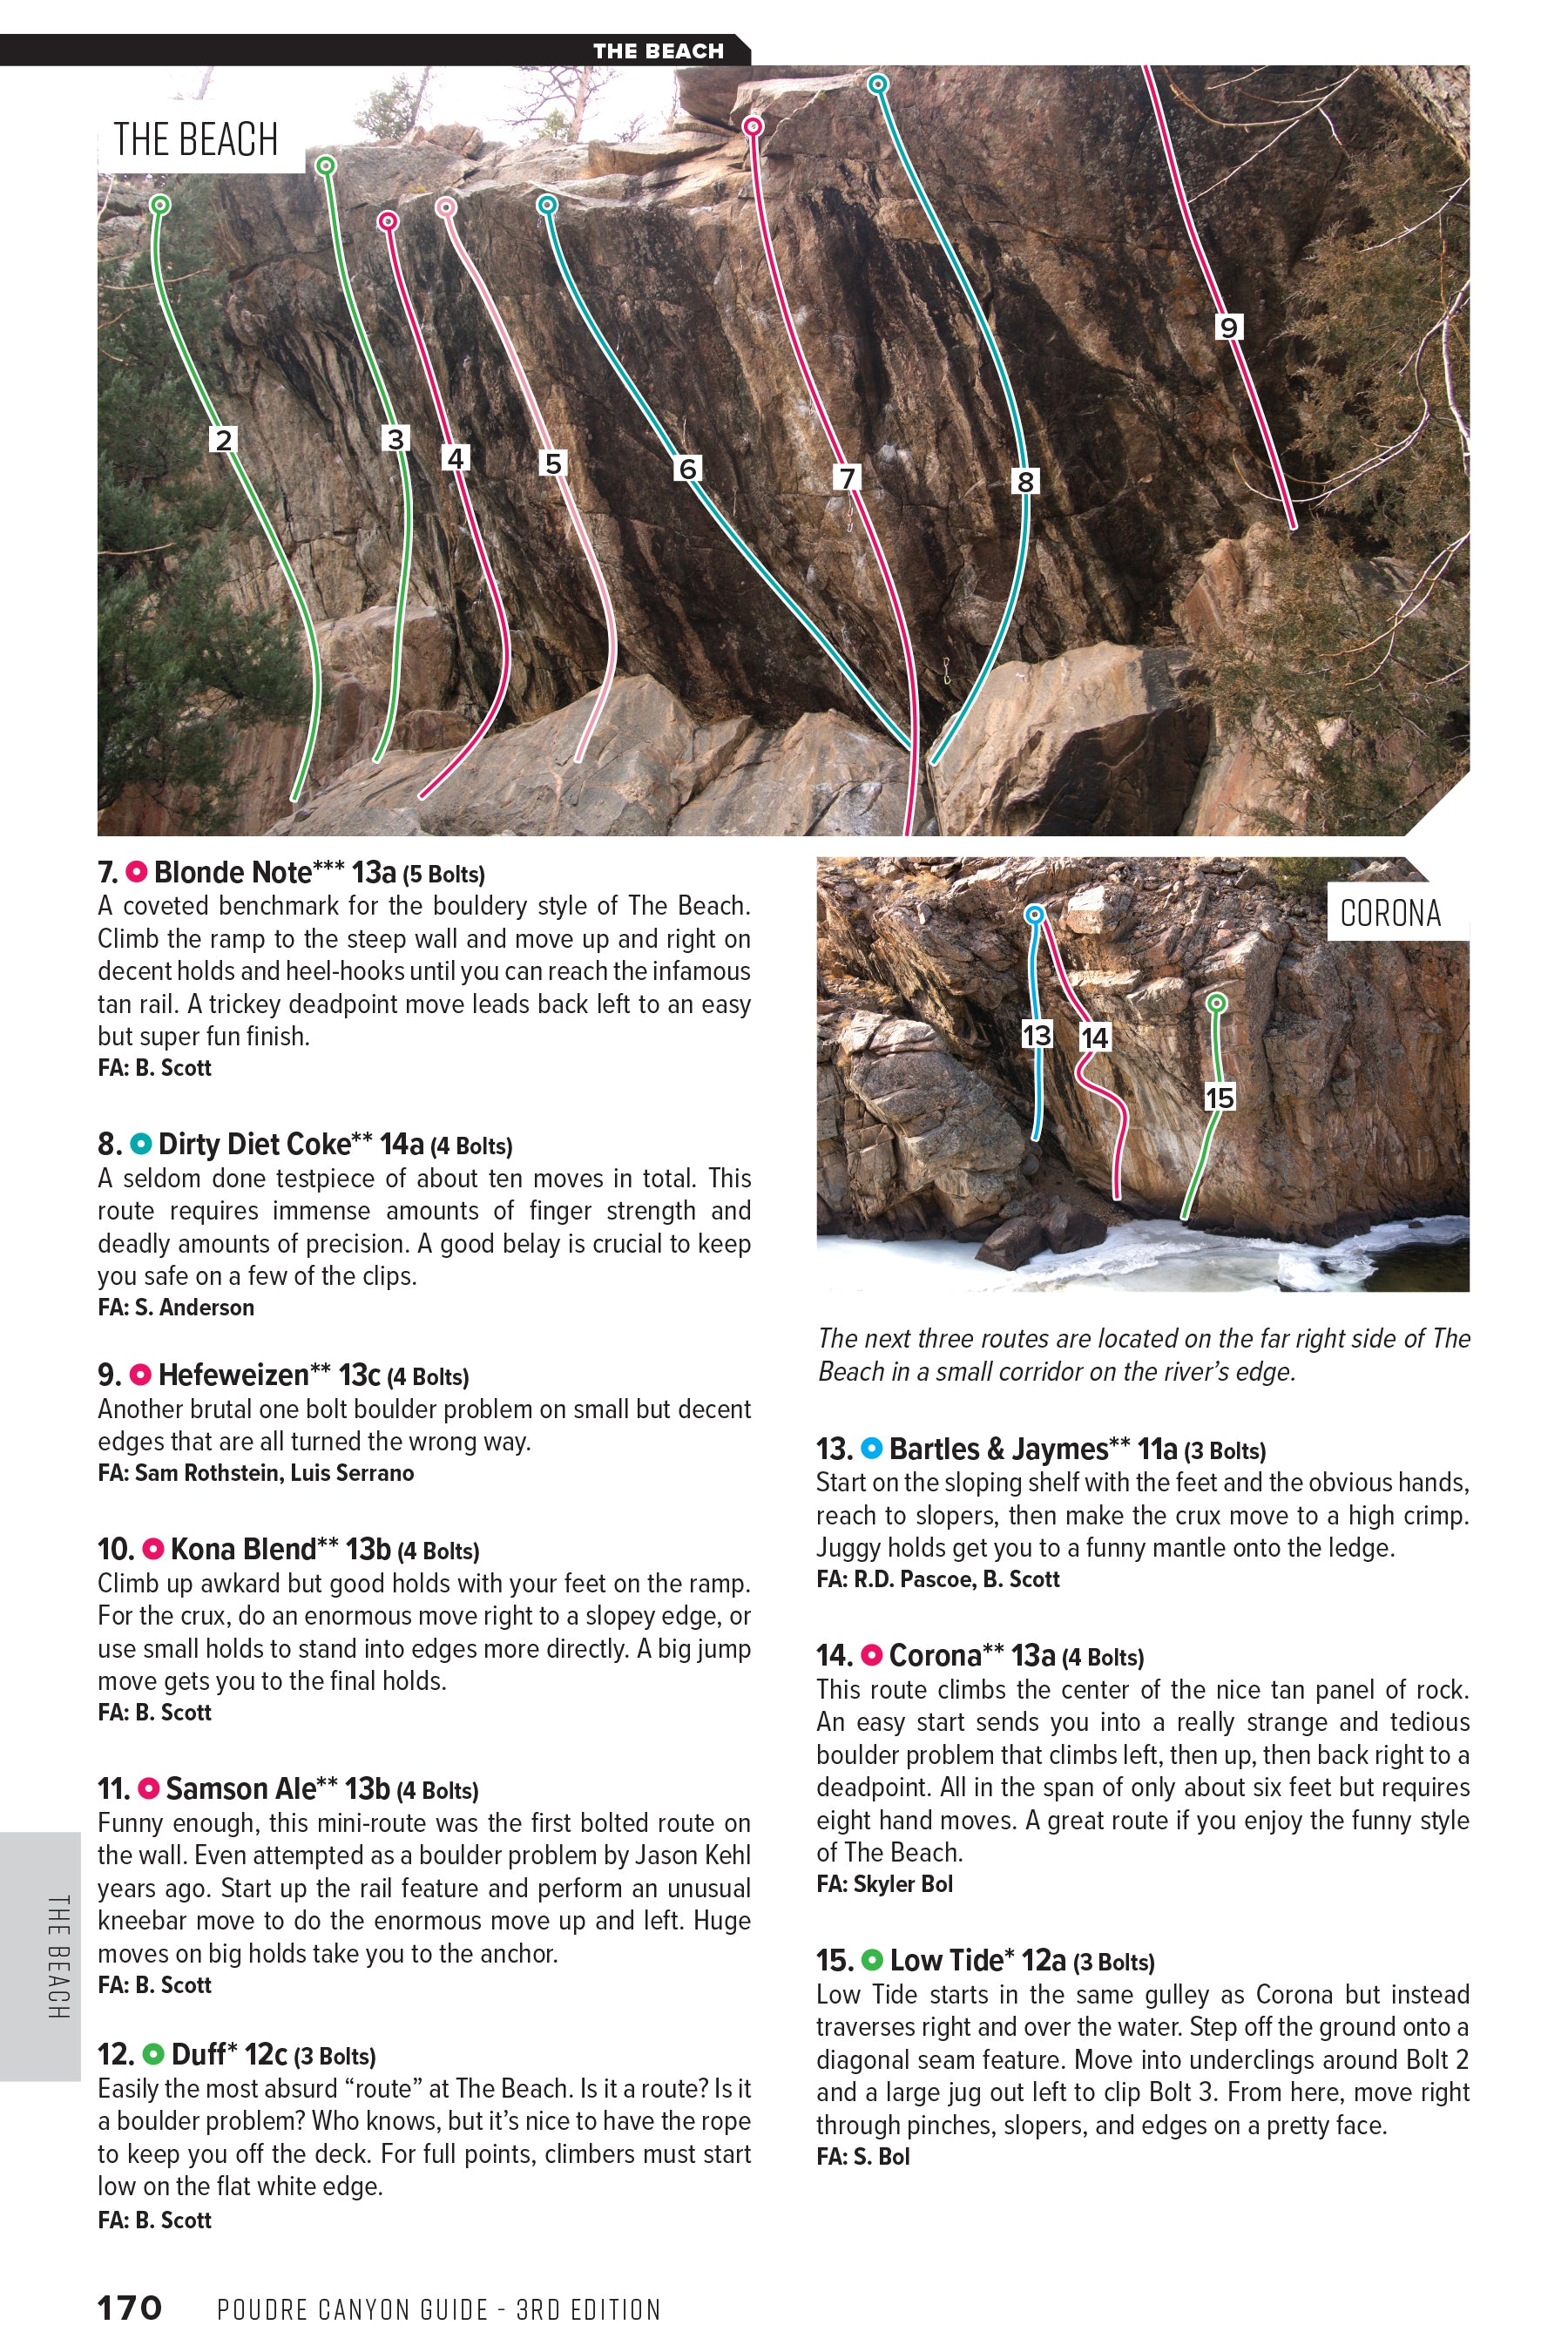 Poudre Canyon Rock Climbing Guide 3rd Edition - 